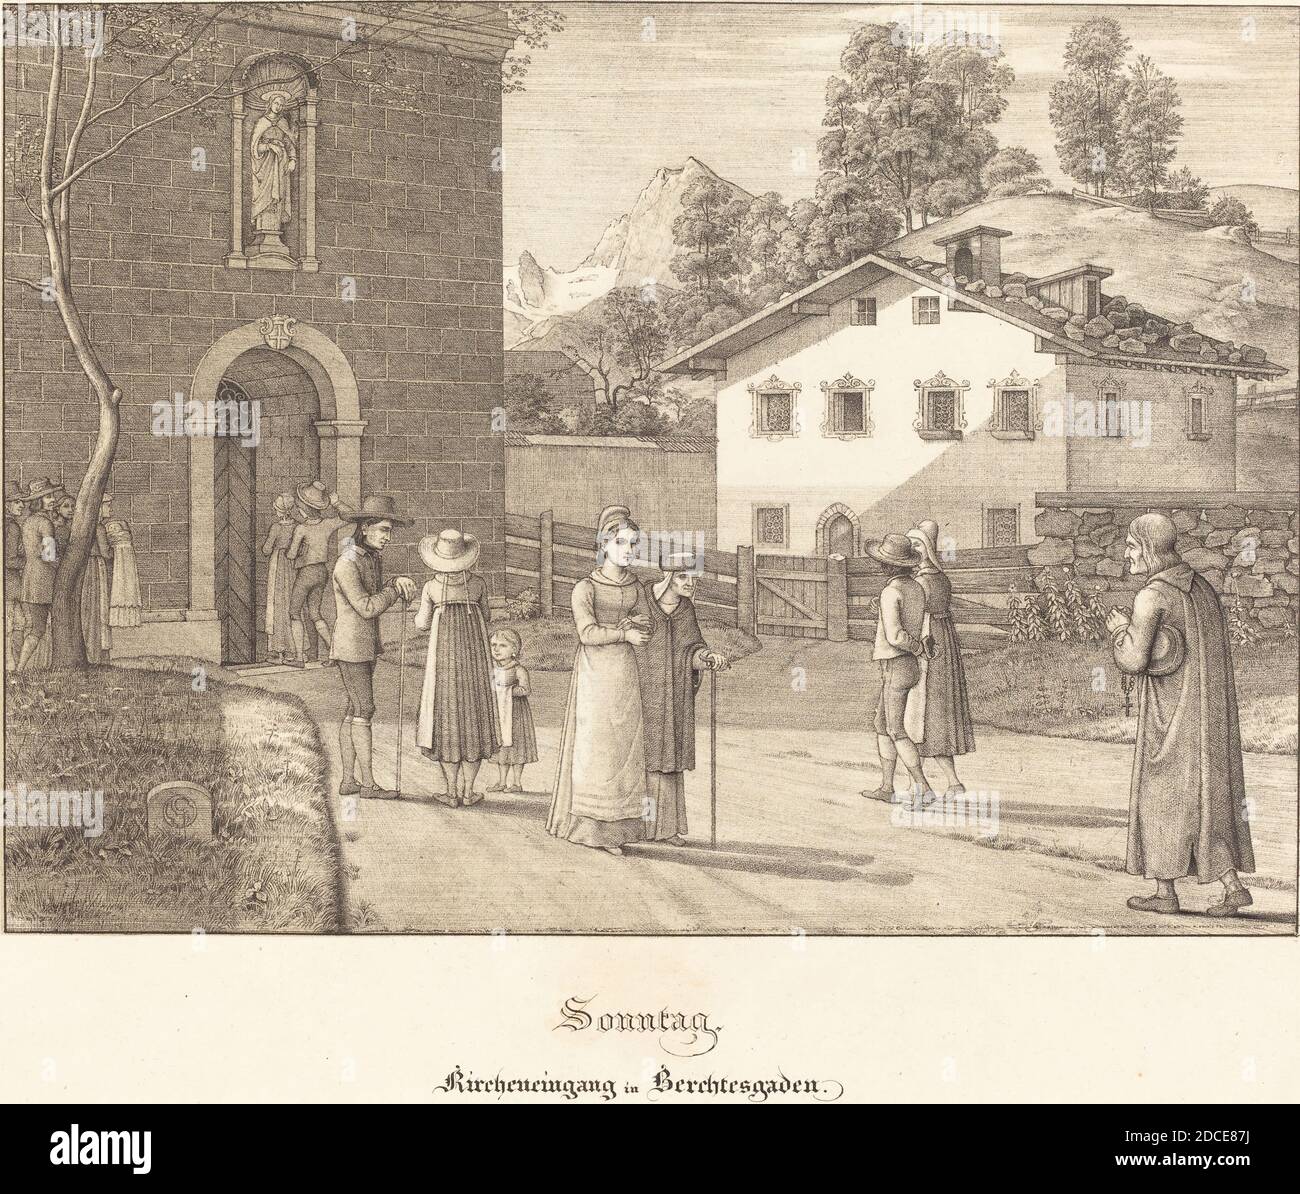 Ferdinand Olivier, (artist), German, 1785 - 1841, Sonntag - Kircheneingang in Berchtesgaden (Sunday - Going to Church near Berchtesgaden), Seven Places in Salzburg and Berchtesgaden, (series), 1823, lithograph Stock Photo